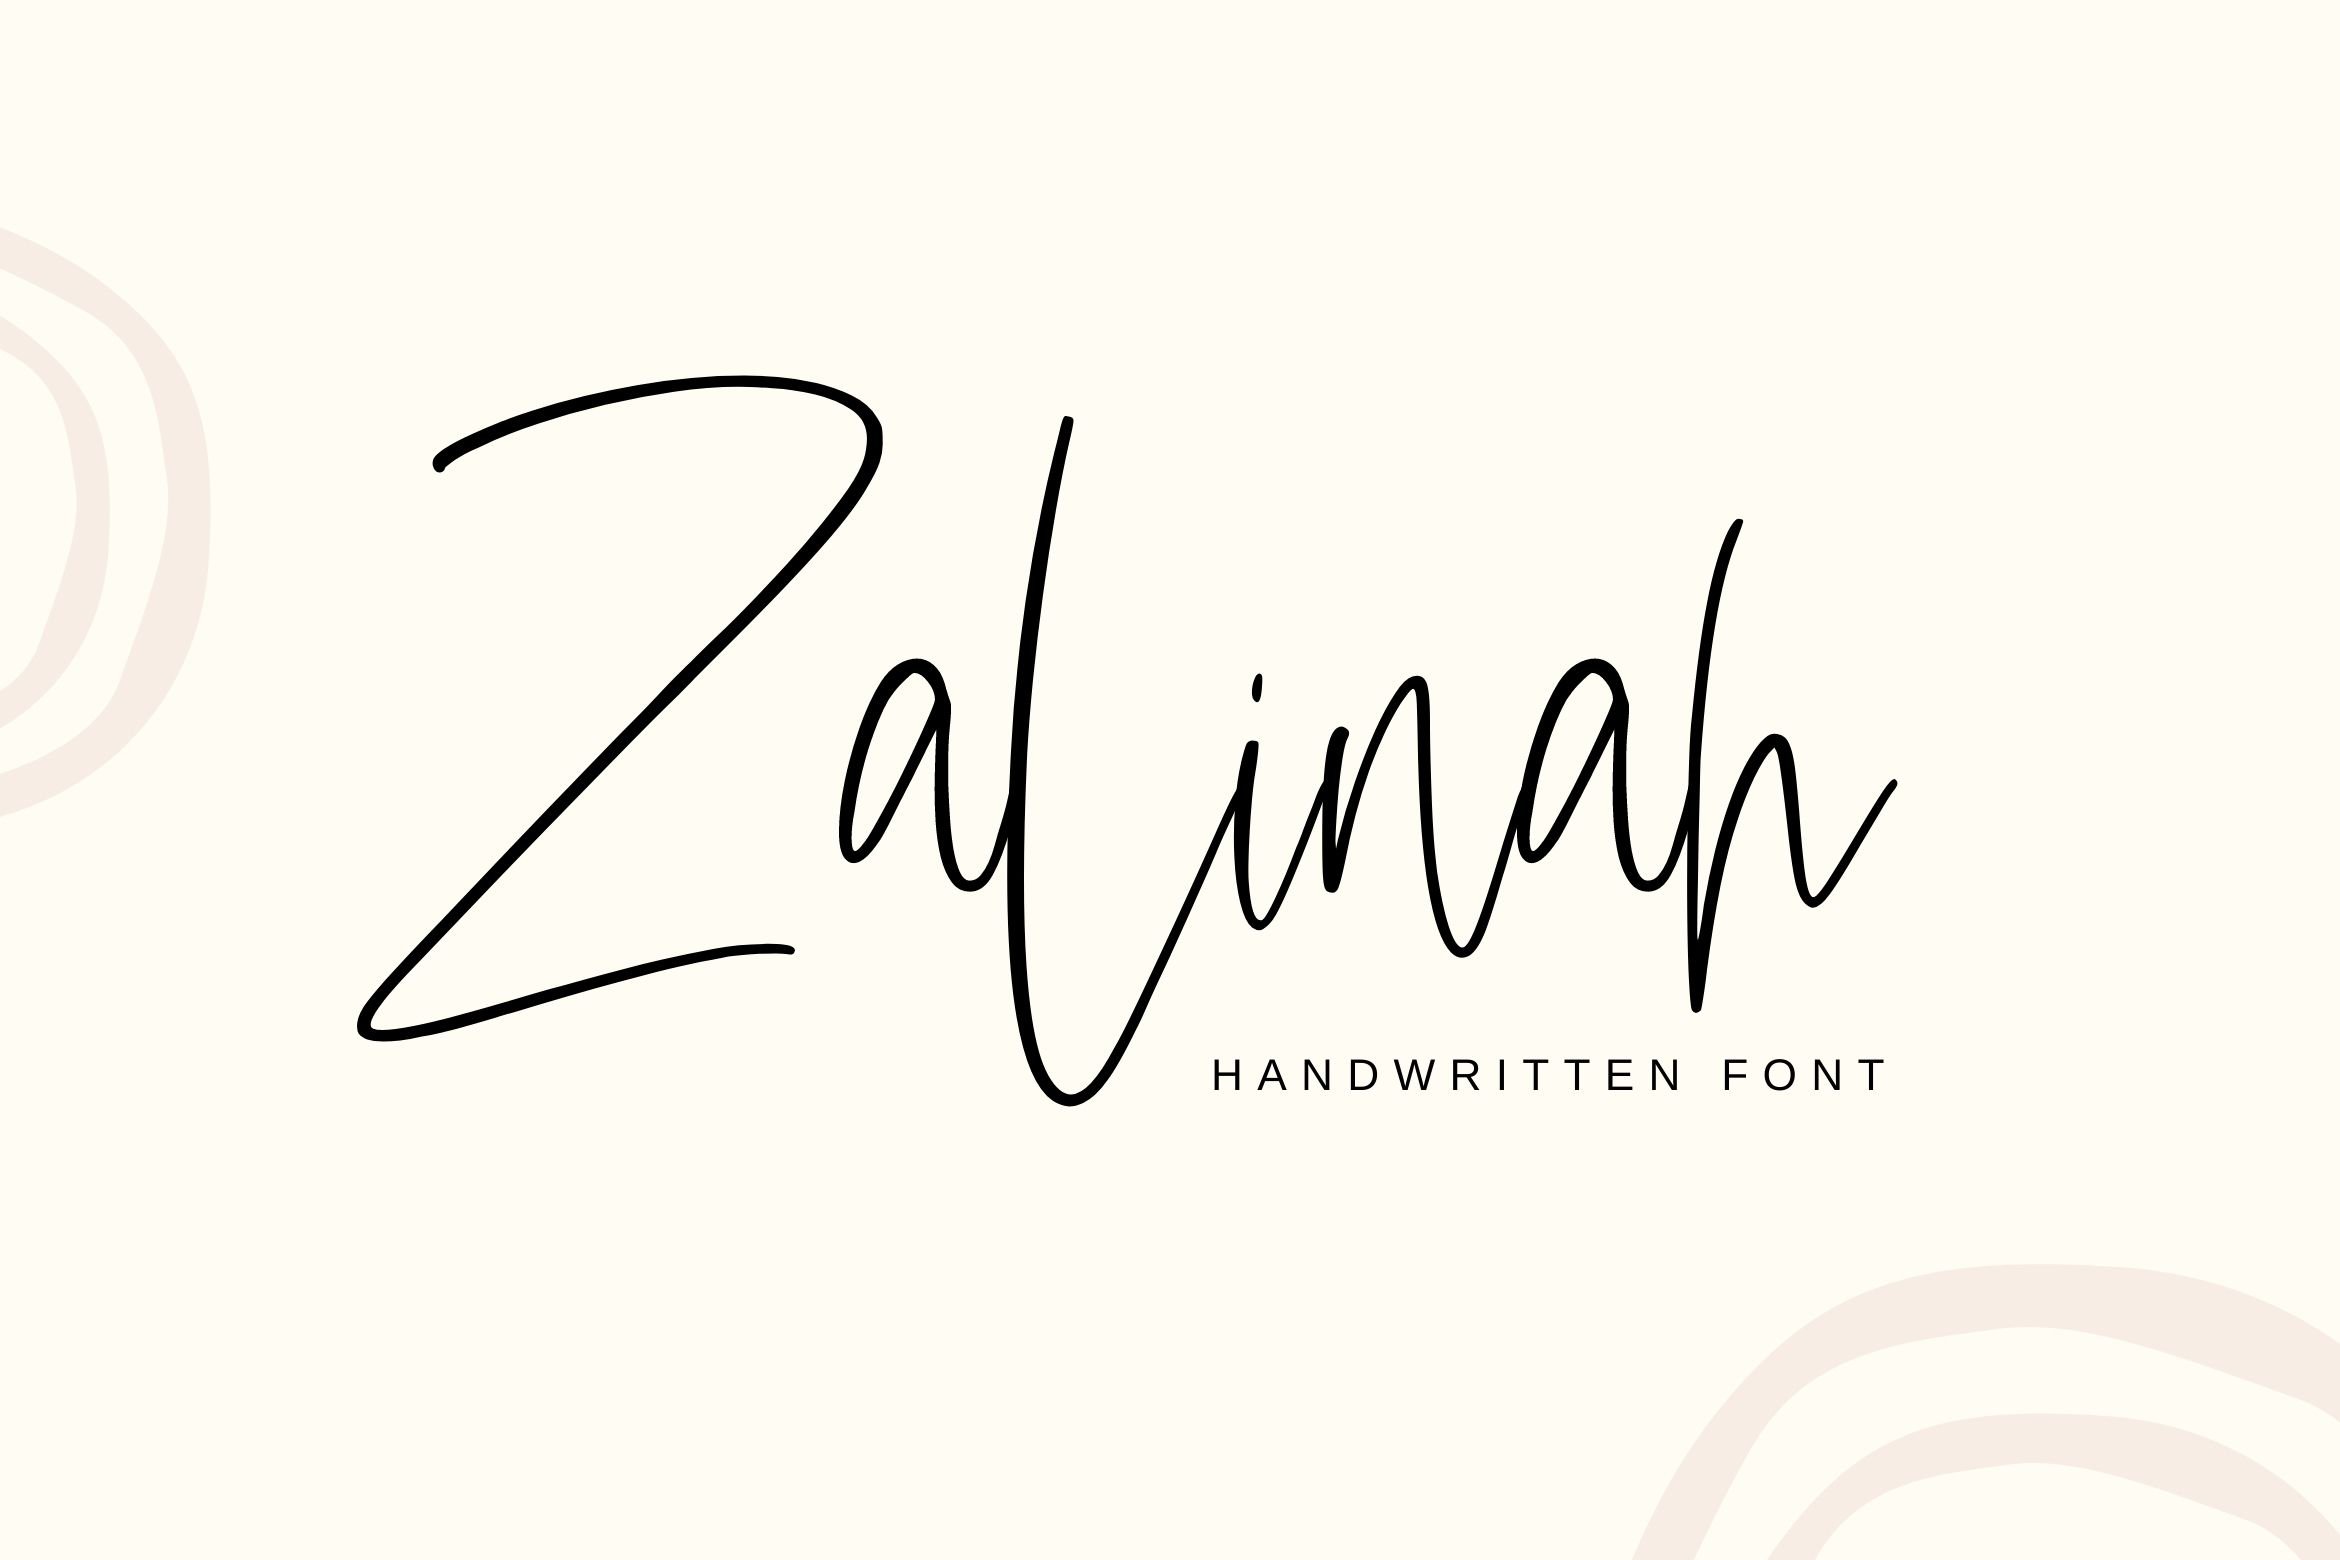 Zalinah Handwritten Font cover image.